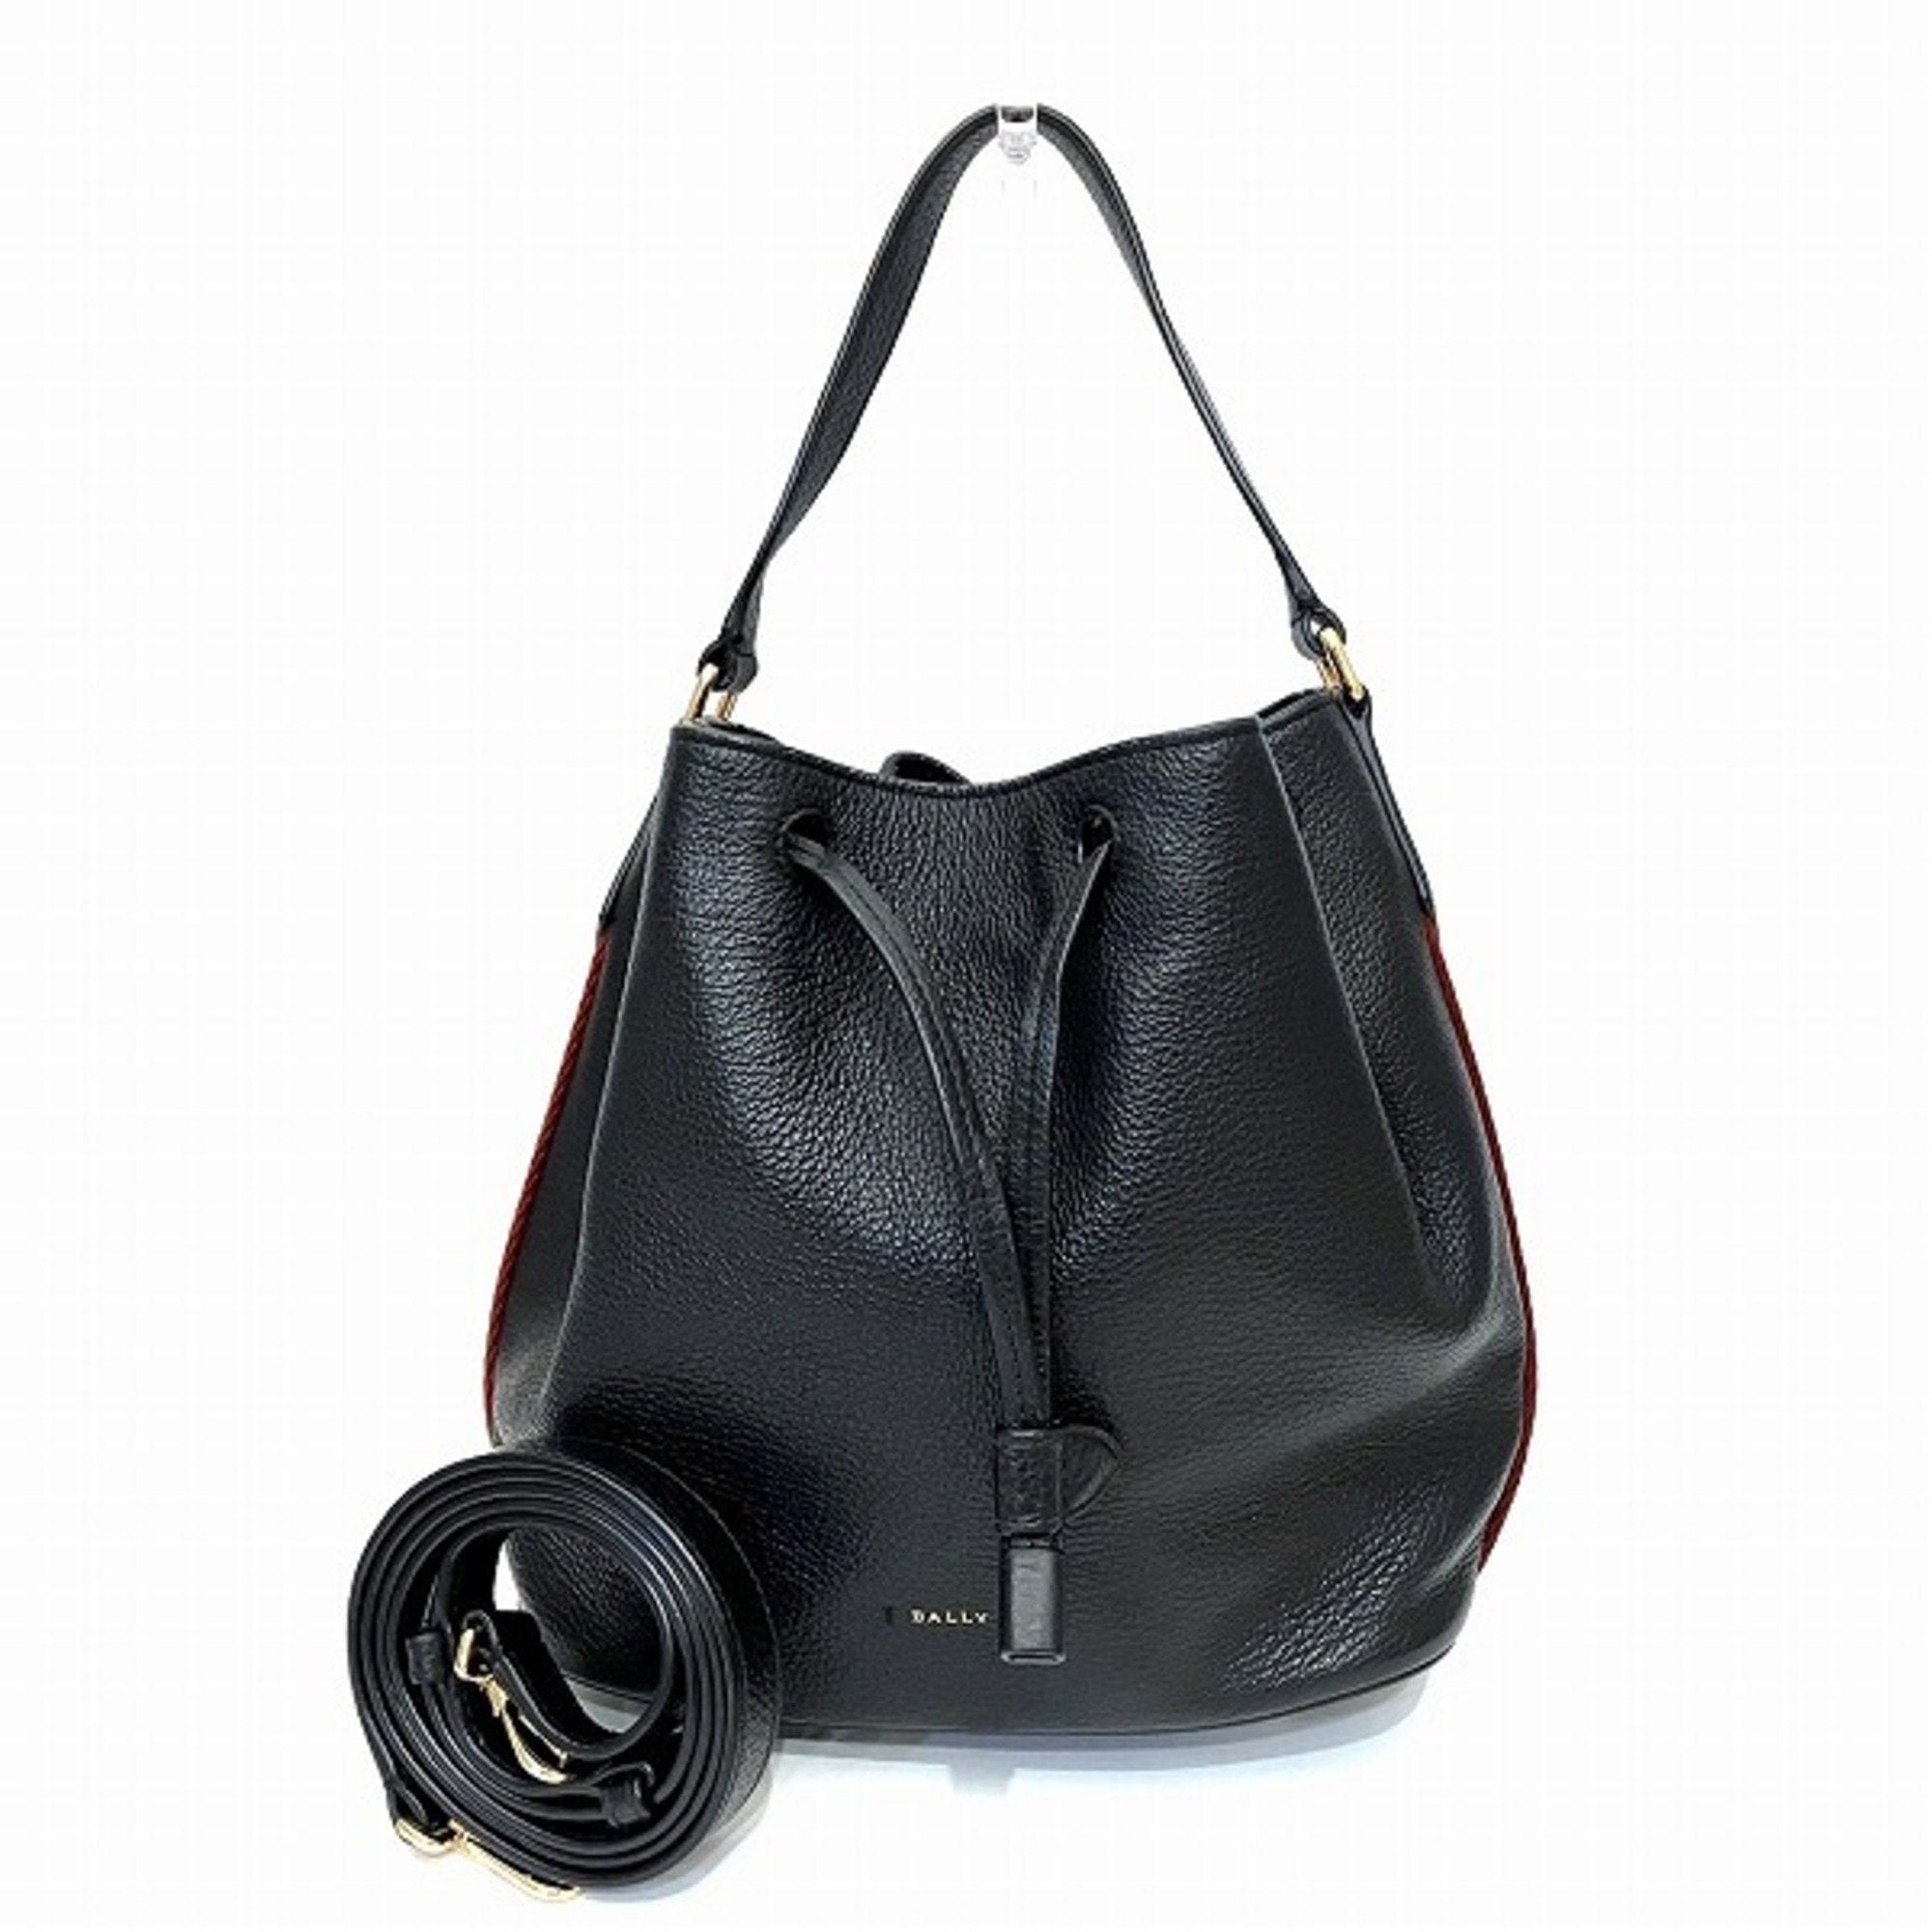 BLYSS Shoulder Bag Handbag Women's